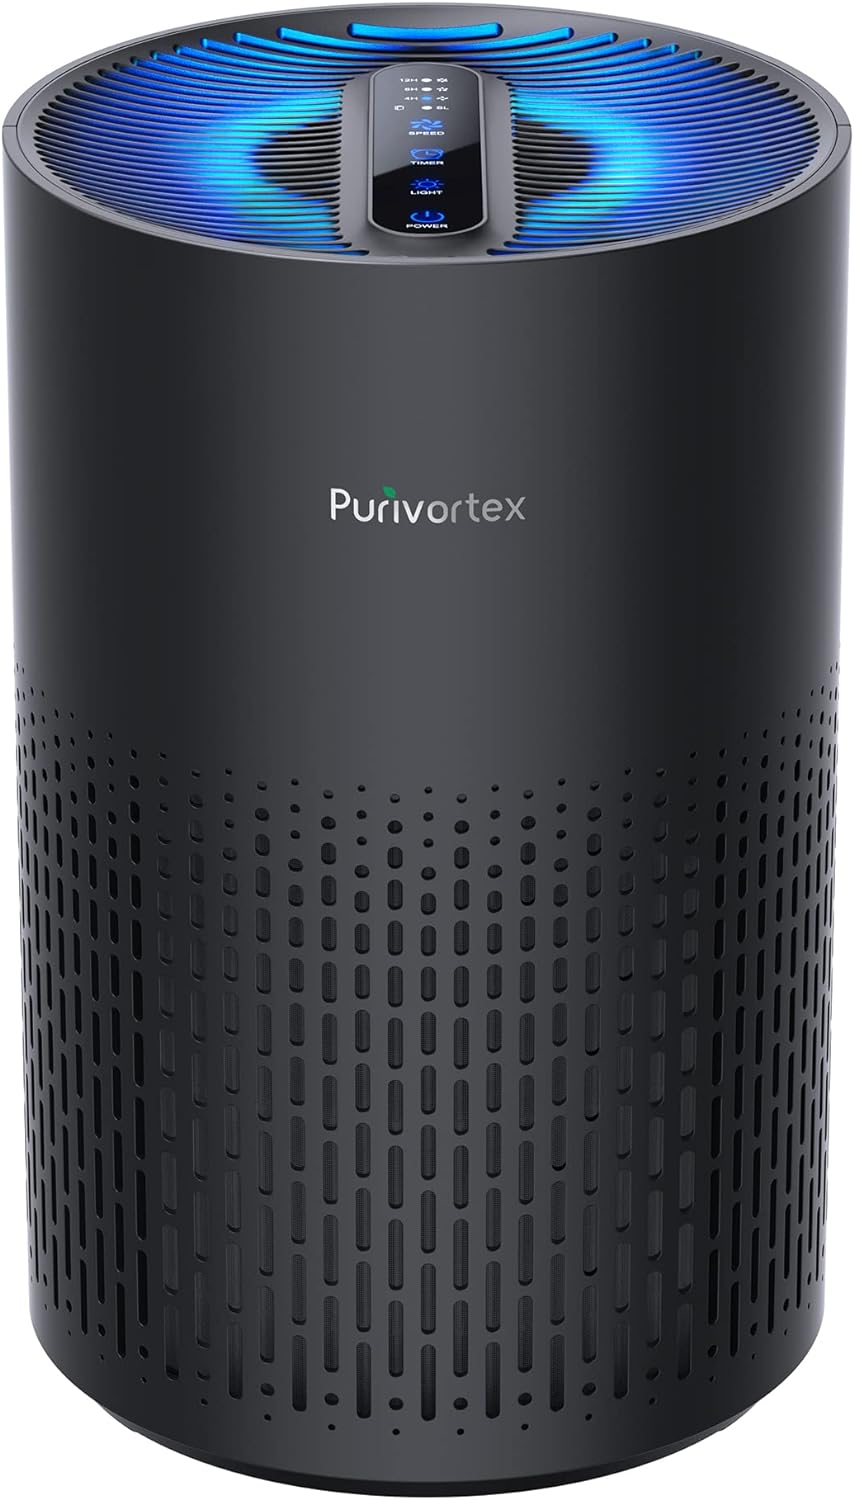 Purivortex Air Purifier